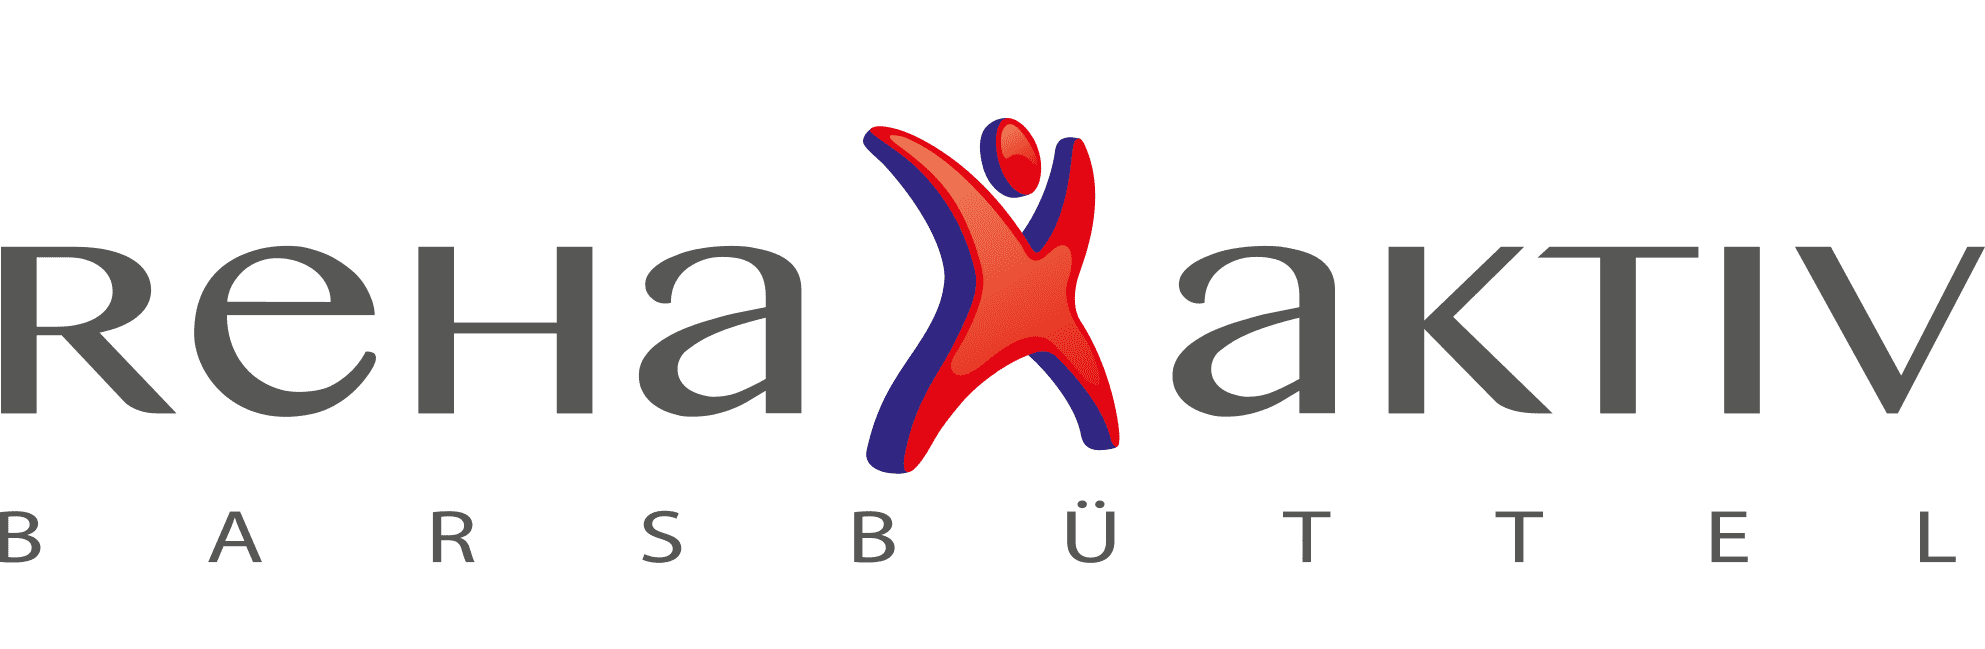 REHA aktiv Barsbüttel Logo